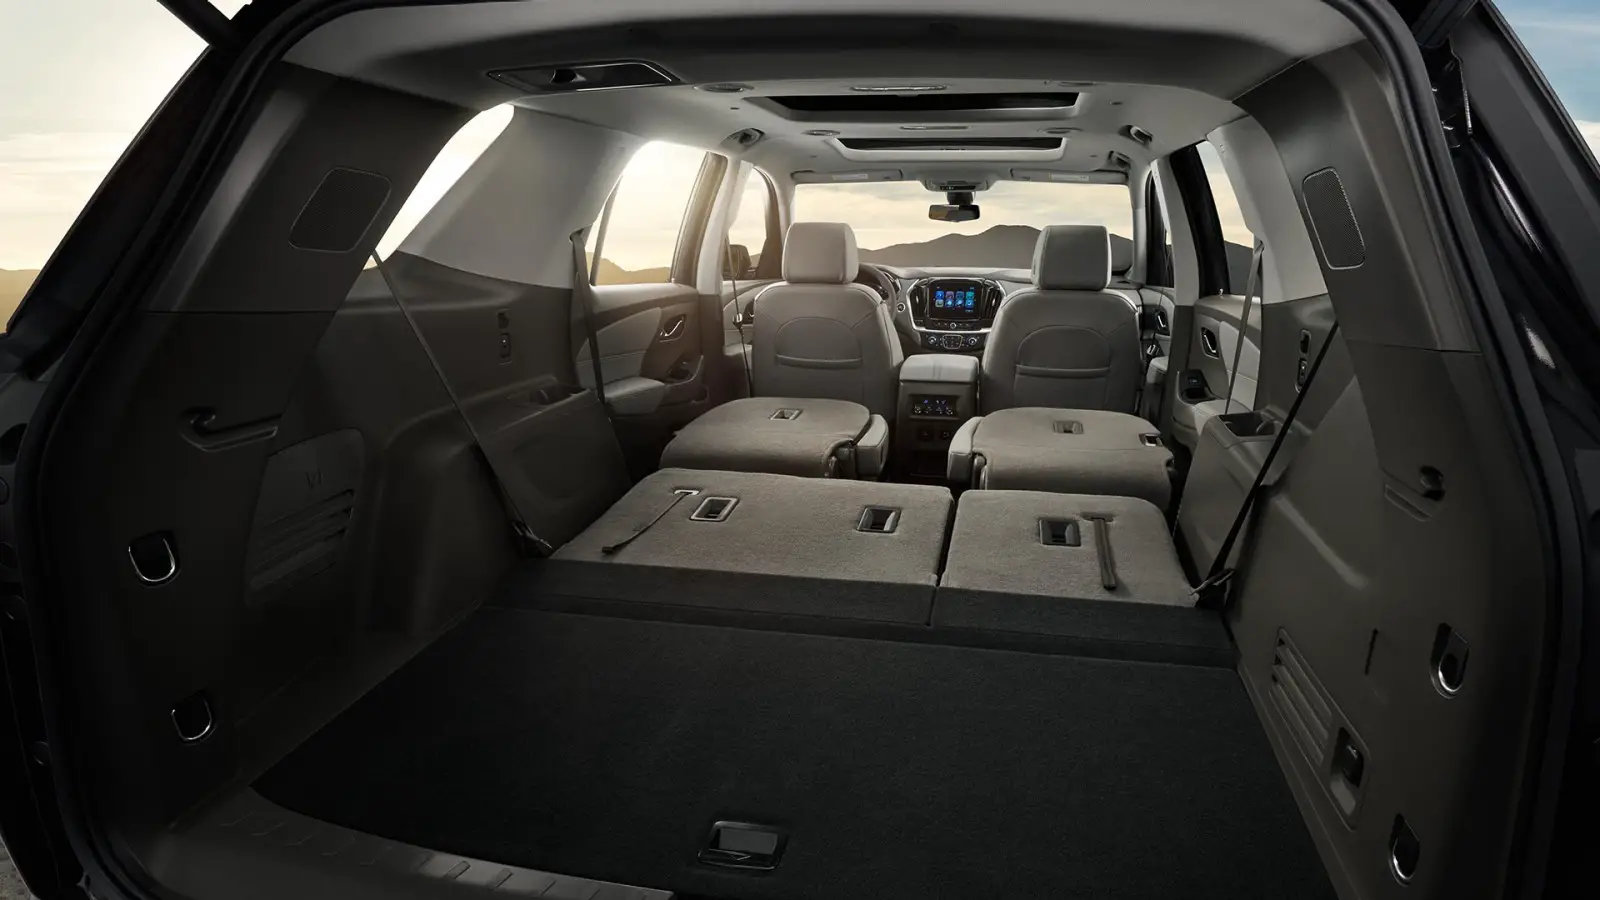 Chevrolet Traverse 2018 interior rear cargo space view